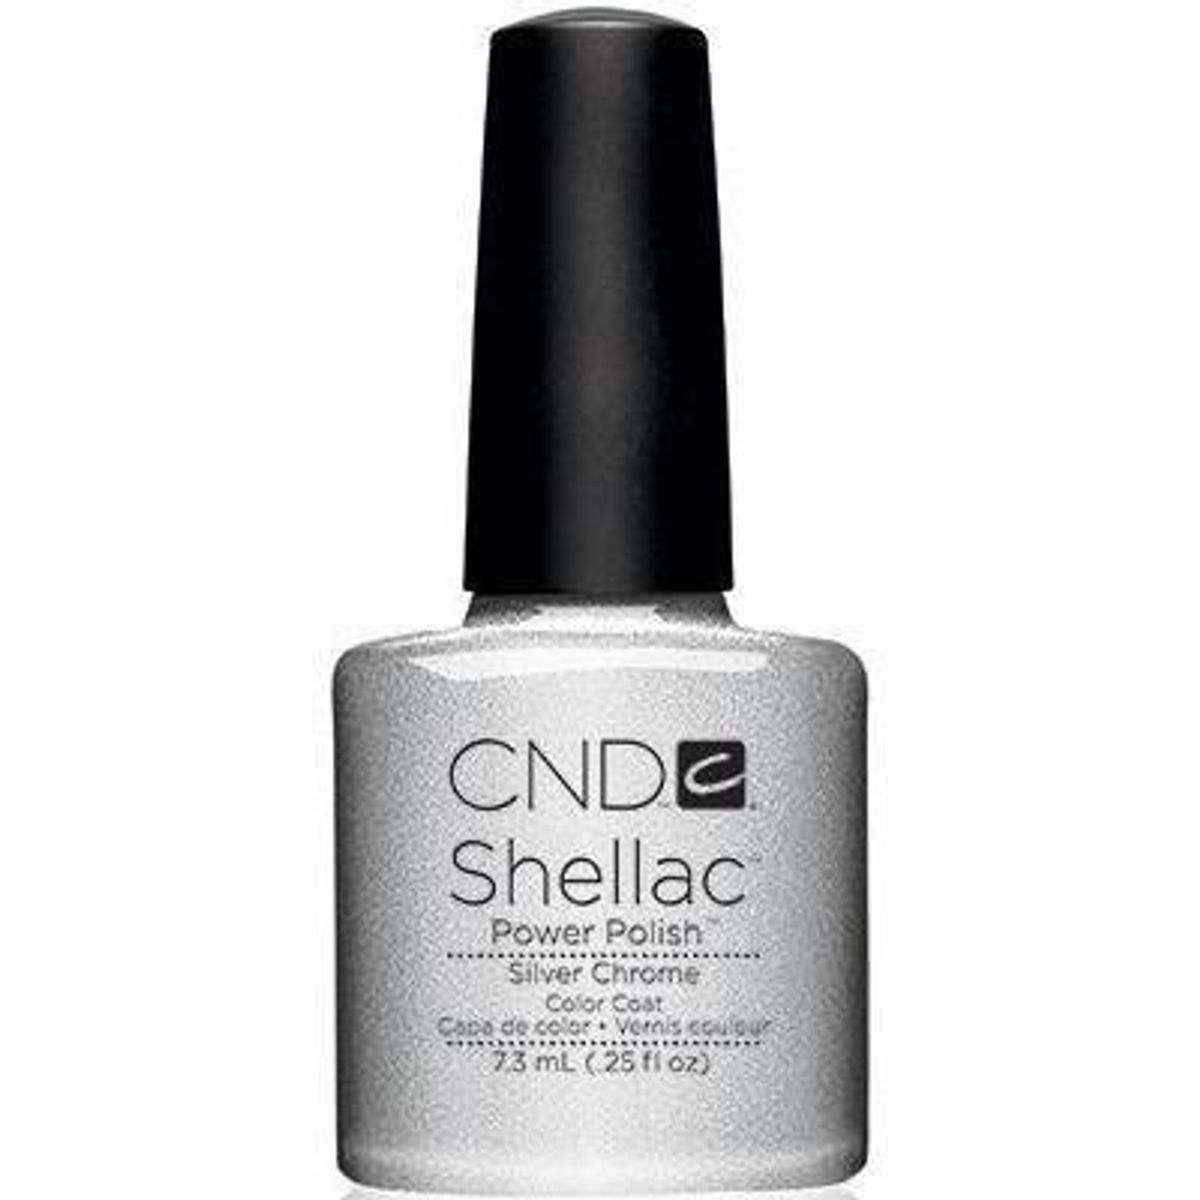 cnd nail polish